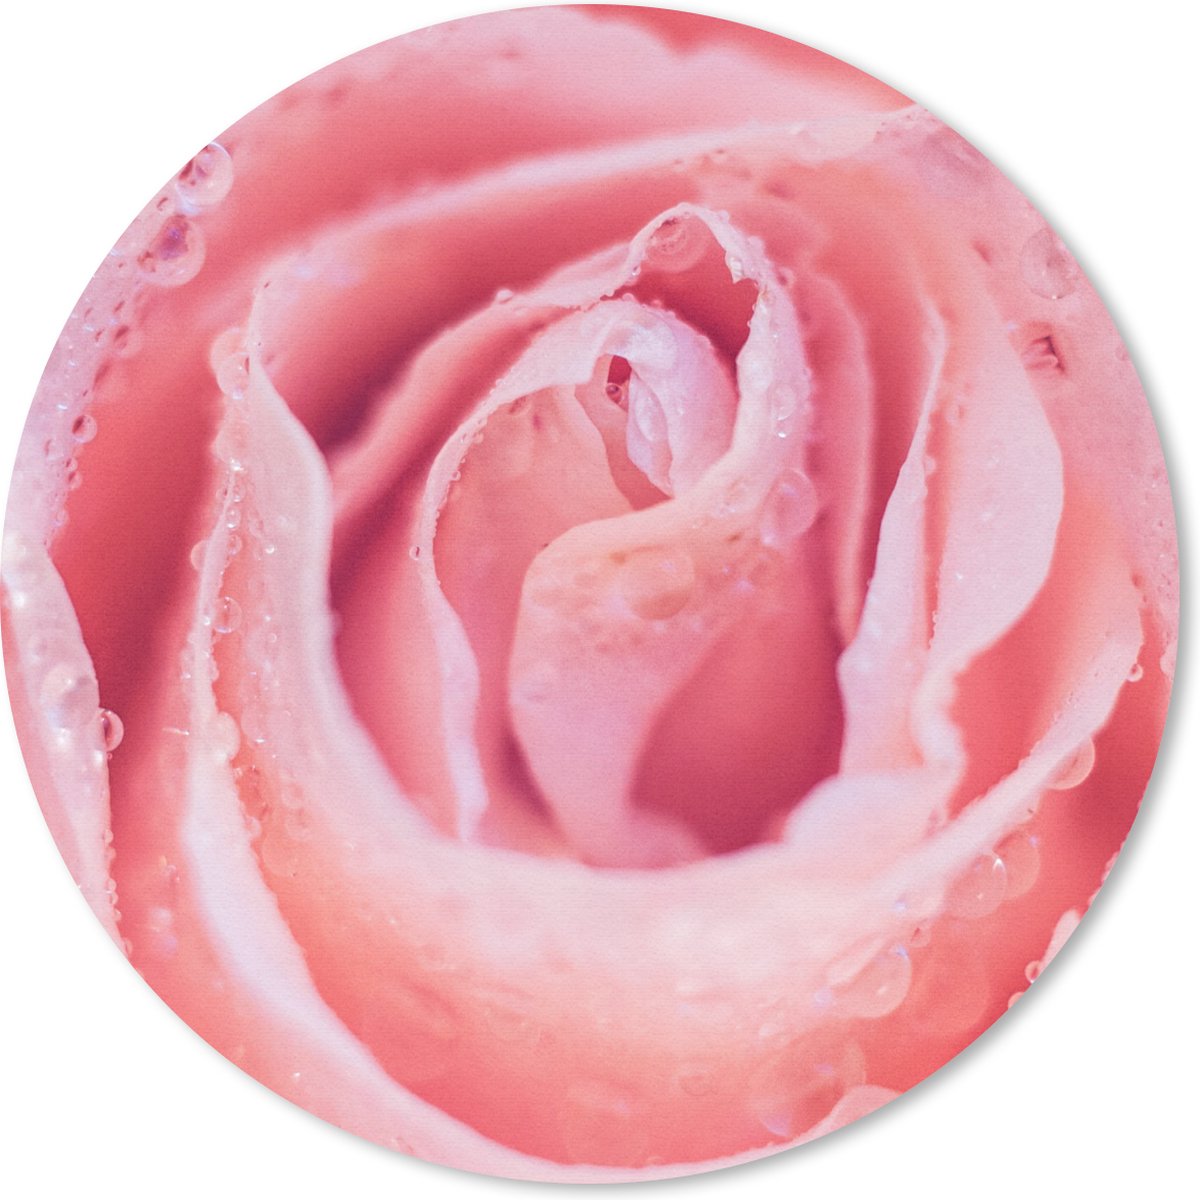 Muismat - Mousepad - Rond - Ochtenddauw op de bloembladen van roze roos - 50x50 cm - Ronde muismat